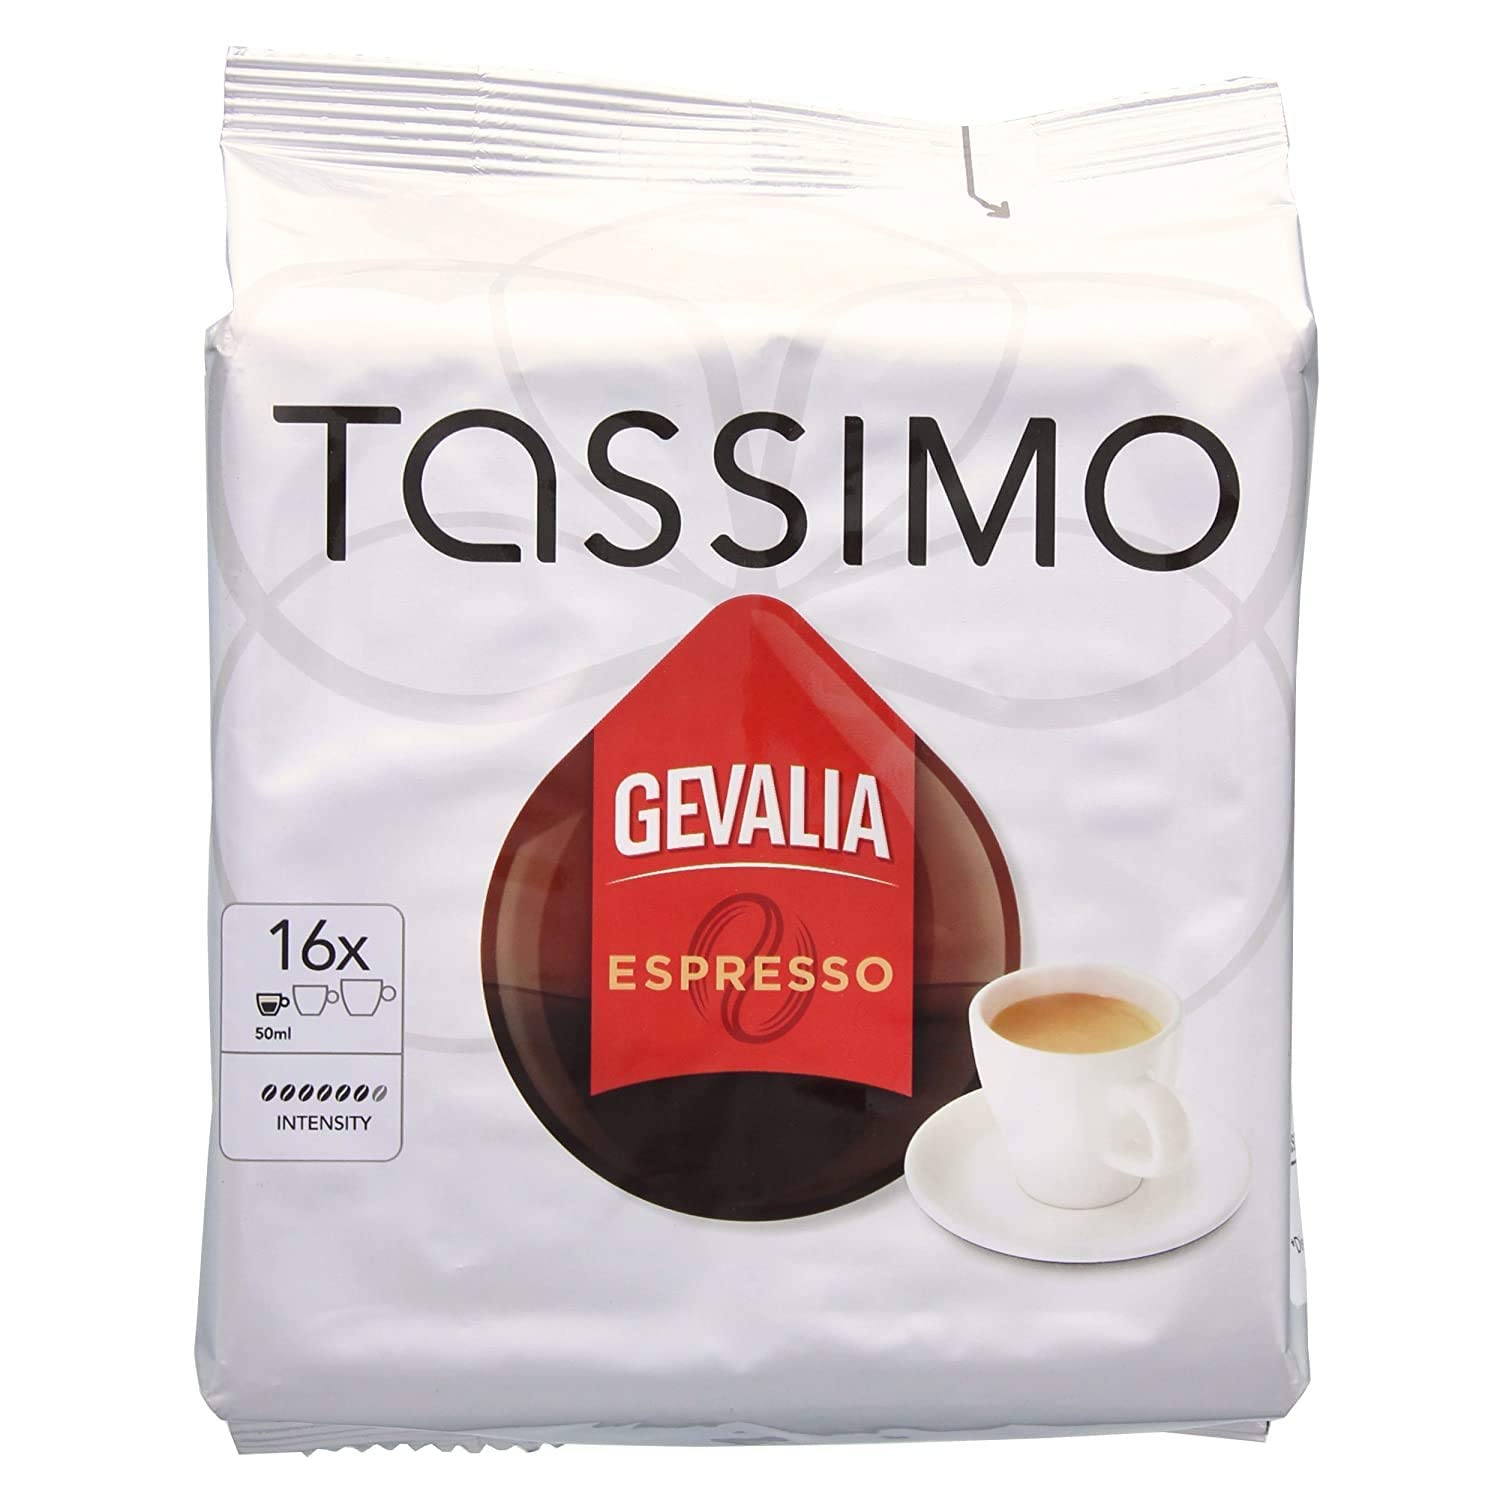 Tassimo T Discs Creamer From Milk Case